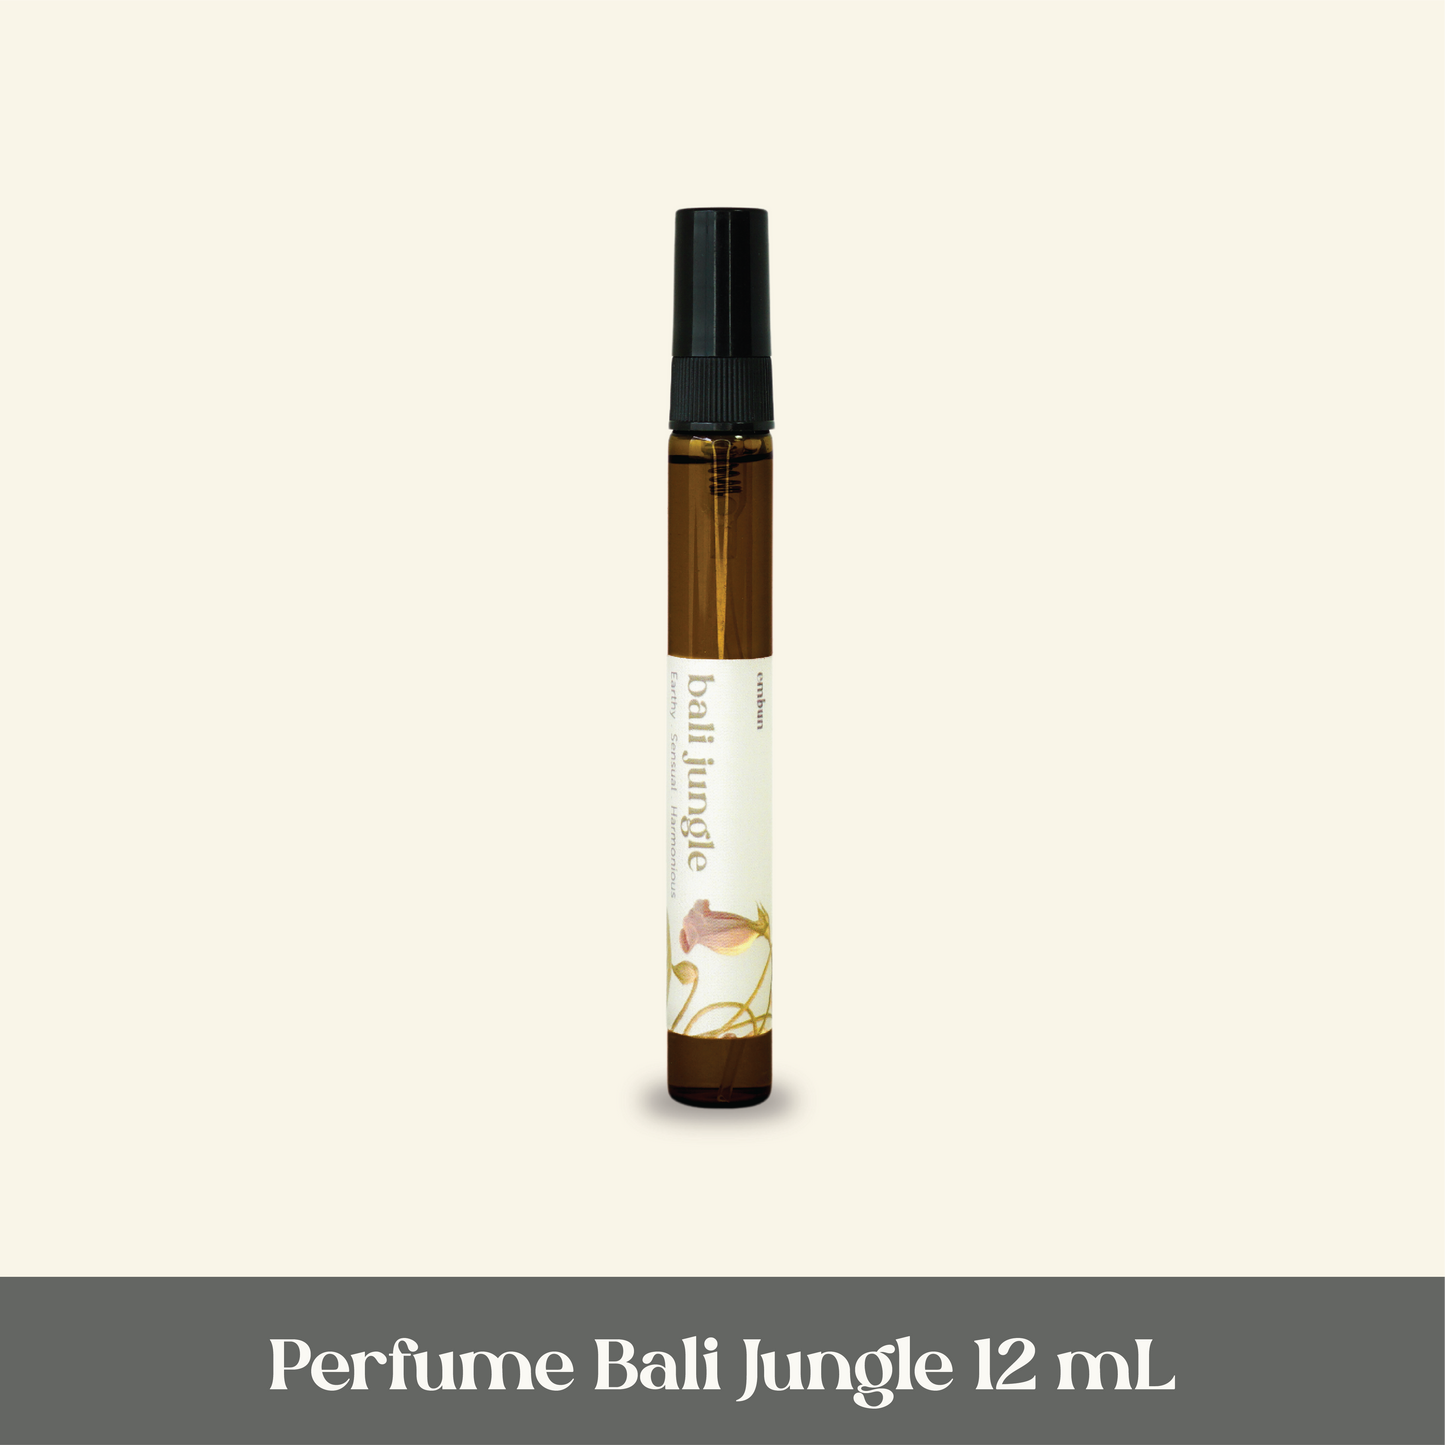 Perfume Bali Jungle 12 ml